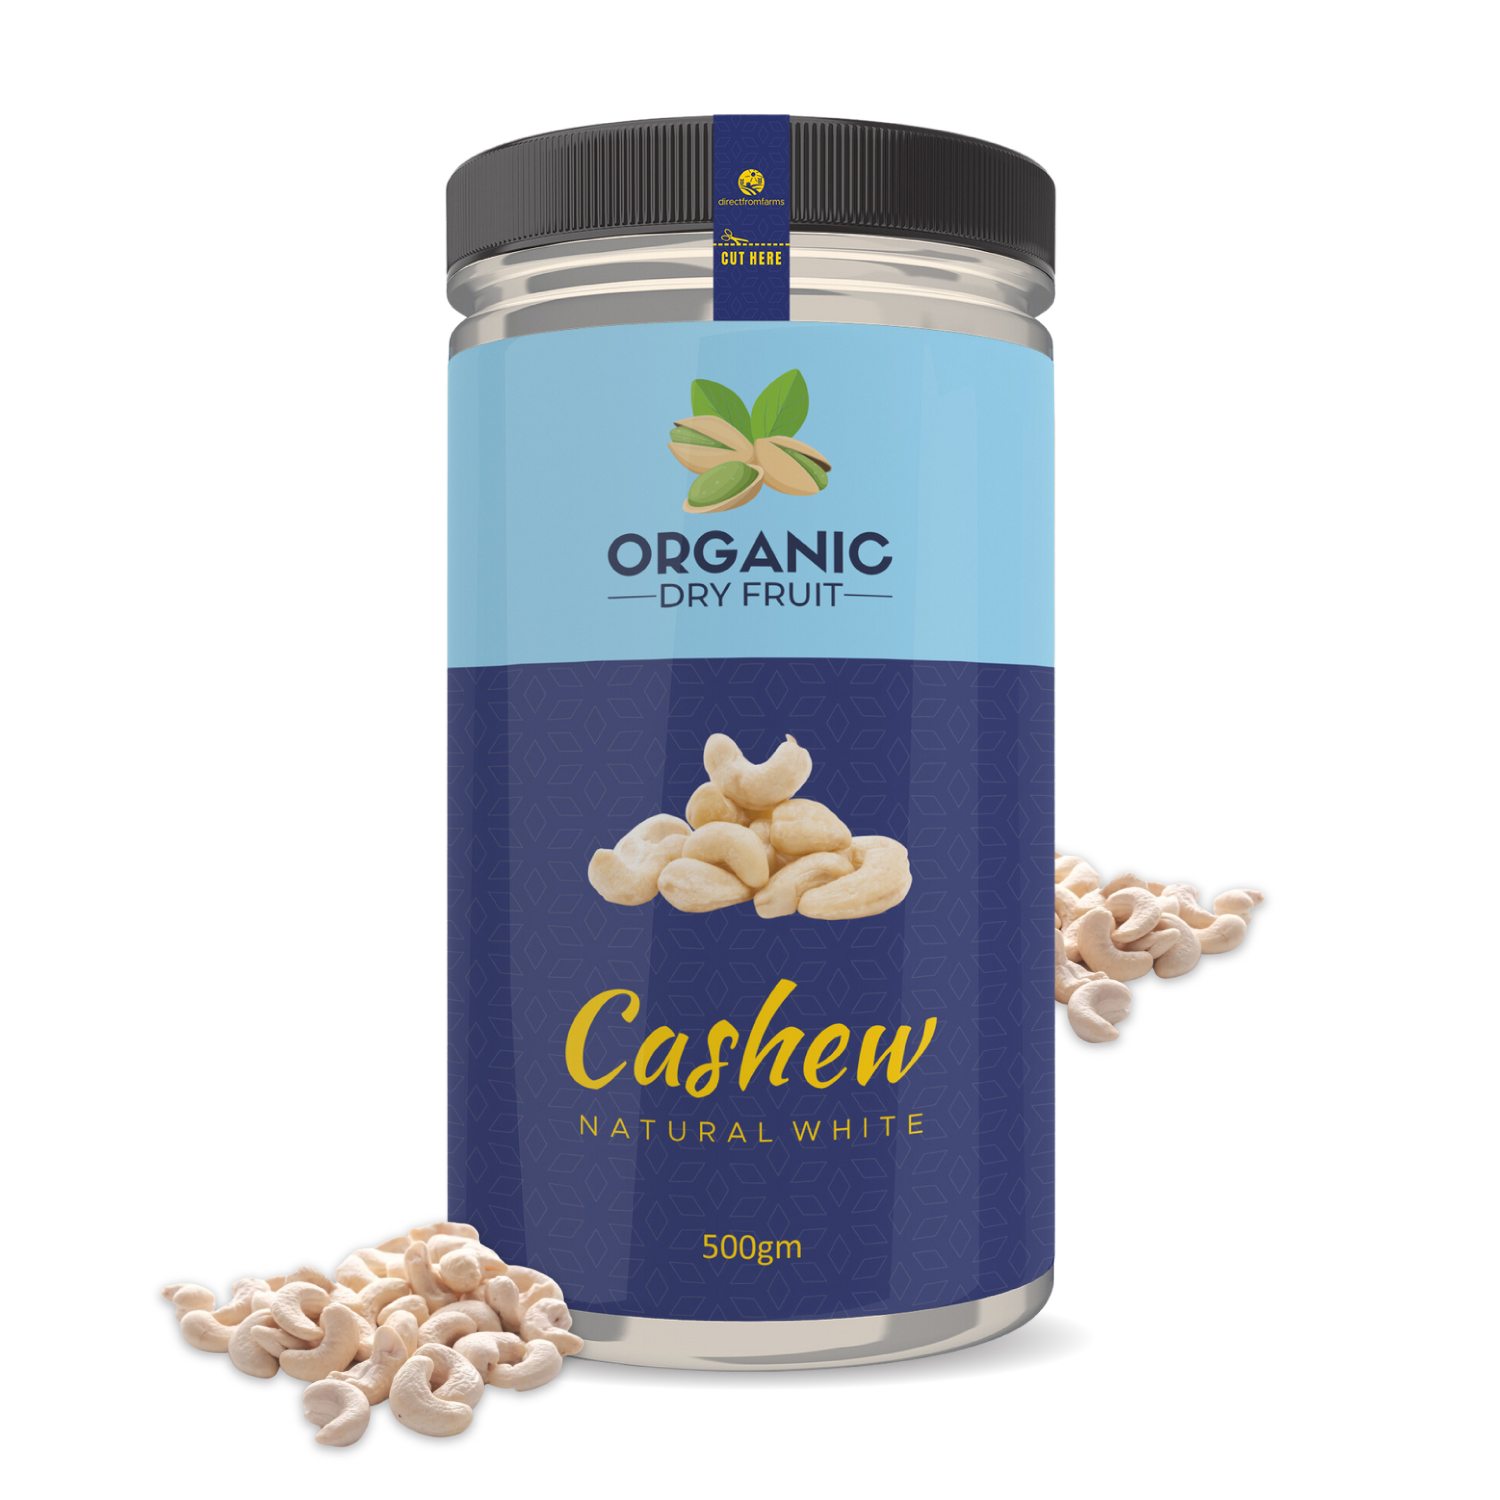 Organic Dry Fruit Cashew Nuts